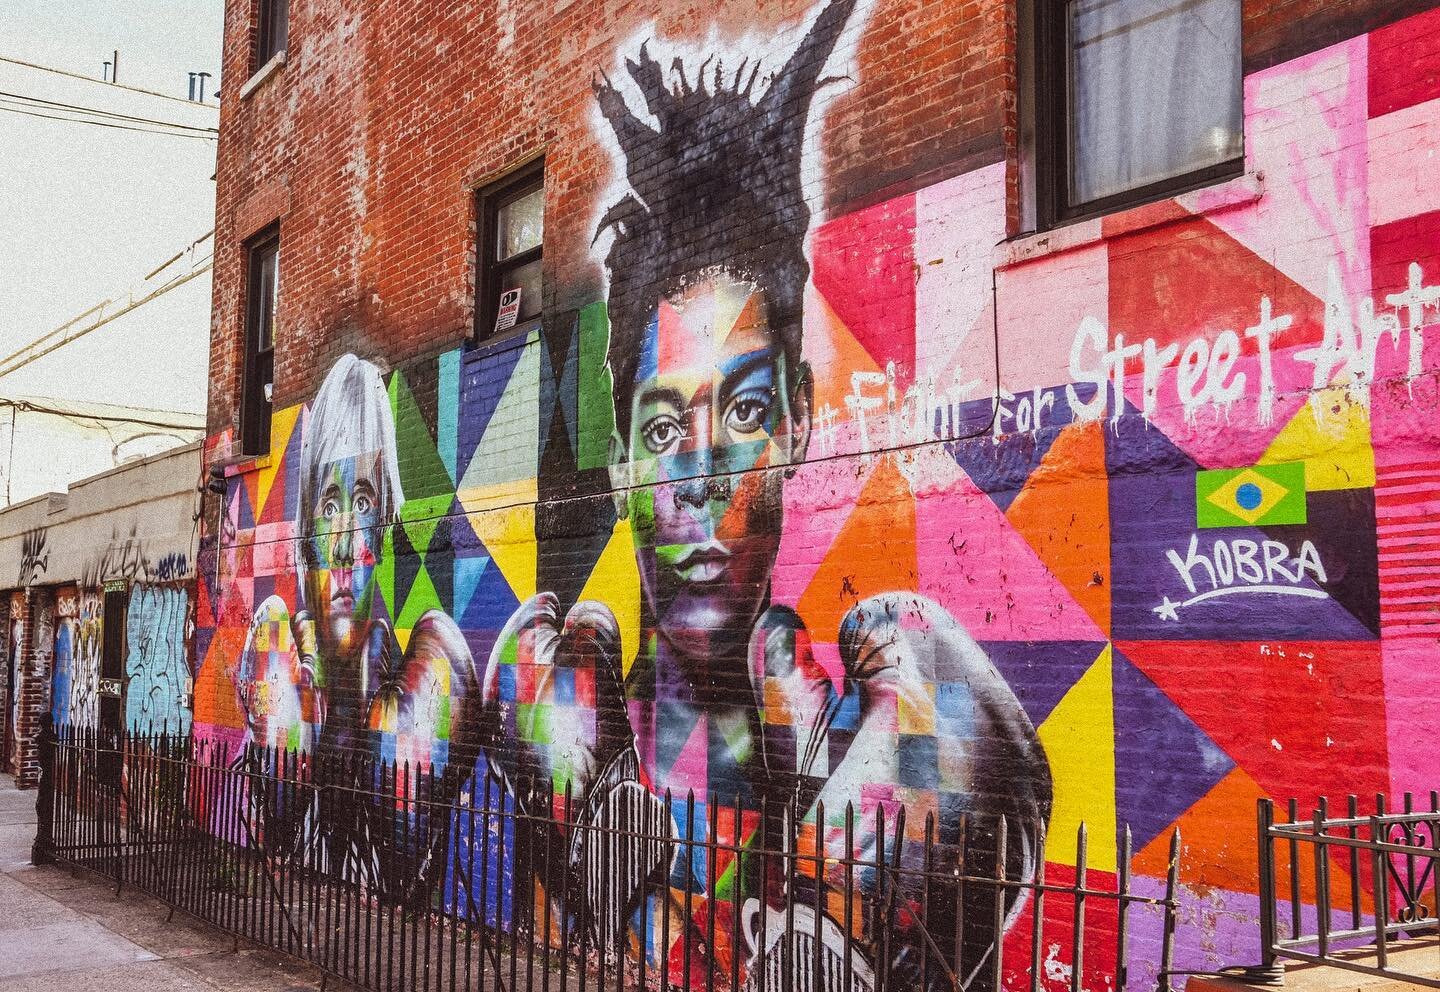 Fight for Street Art ❤️

Basquiat and Warhol spotted in Brooklyn 🗽 

.
.
.
.
.
.
.
.
.
.
.
#andywarhol #andywarholart #jeanmichelbasquiat #basquiat #brooklyn #brooklynstreetart #nyc #newyorkcity #irish #ireland #fujixseries #fujifilm_xseries #fujixe